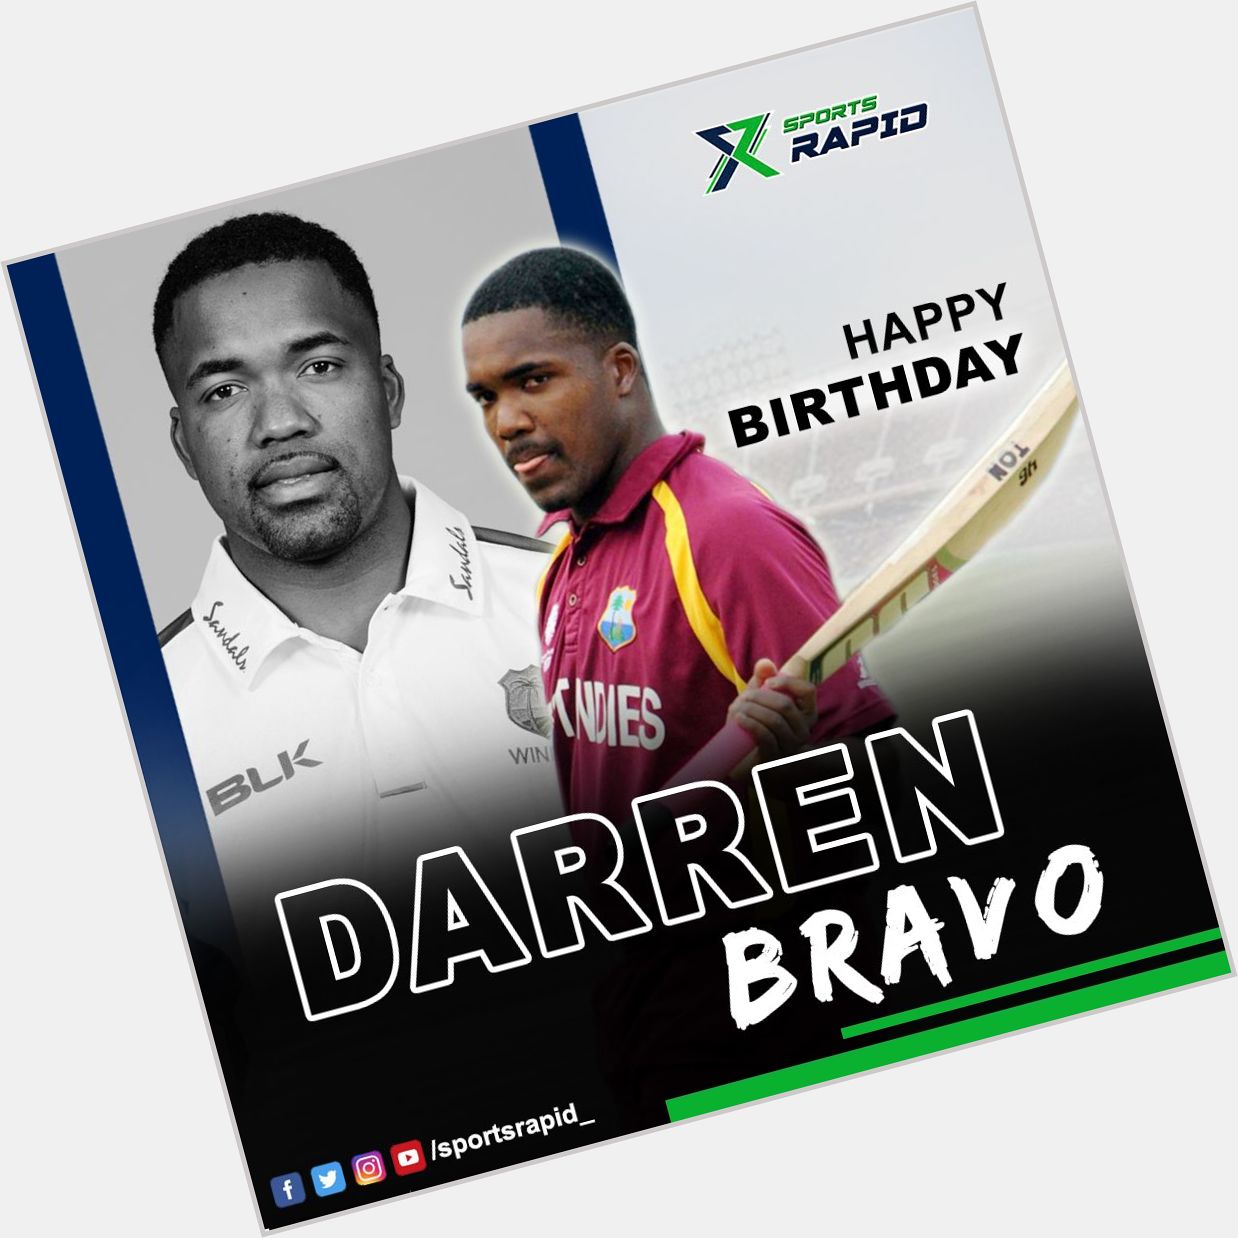 Wishing a very happy birthday to West Indian Darren Bravo!    